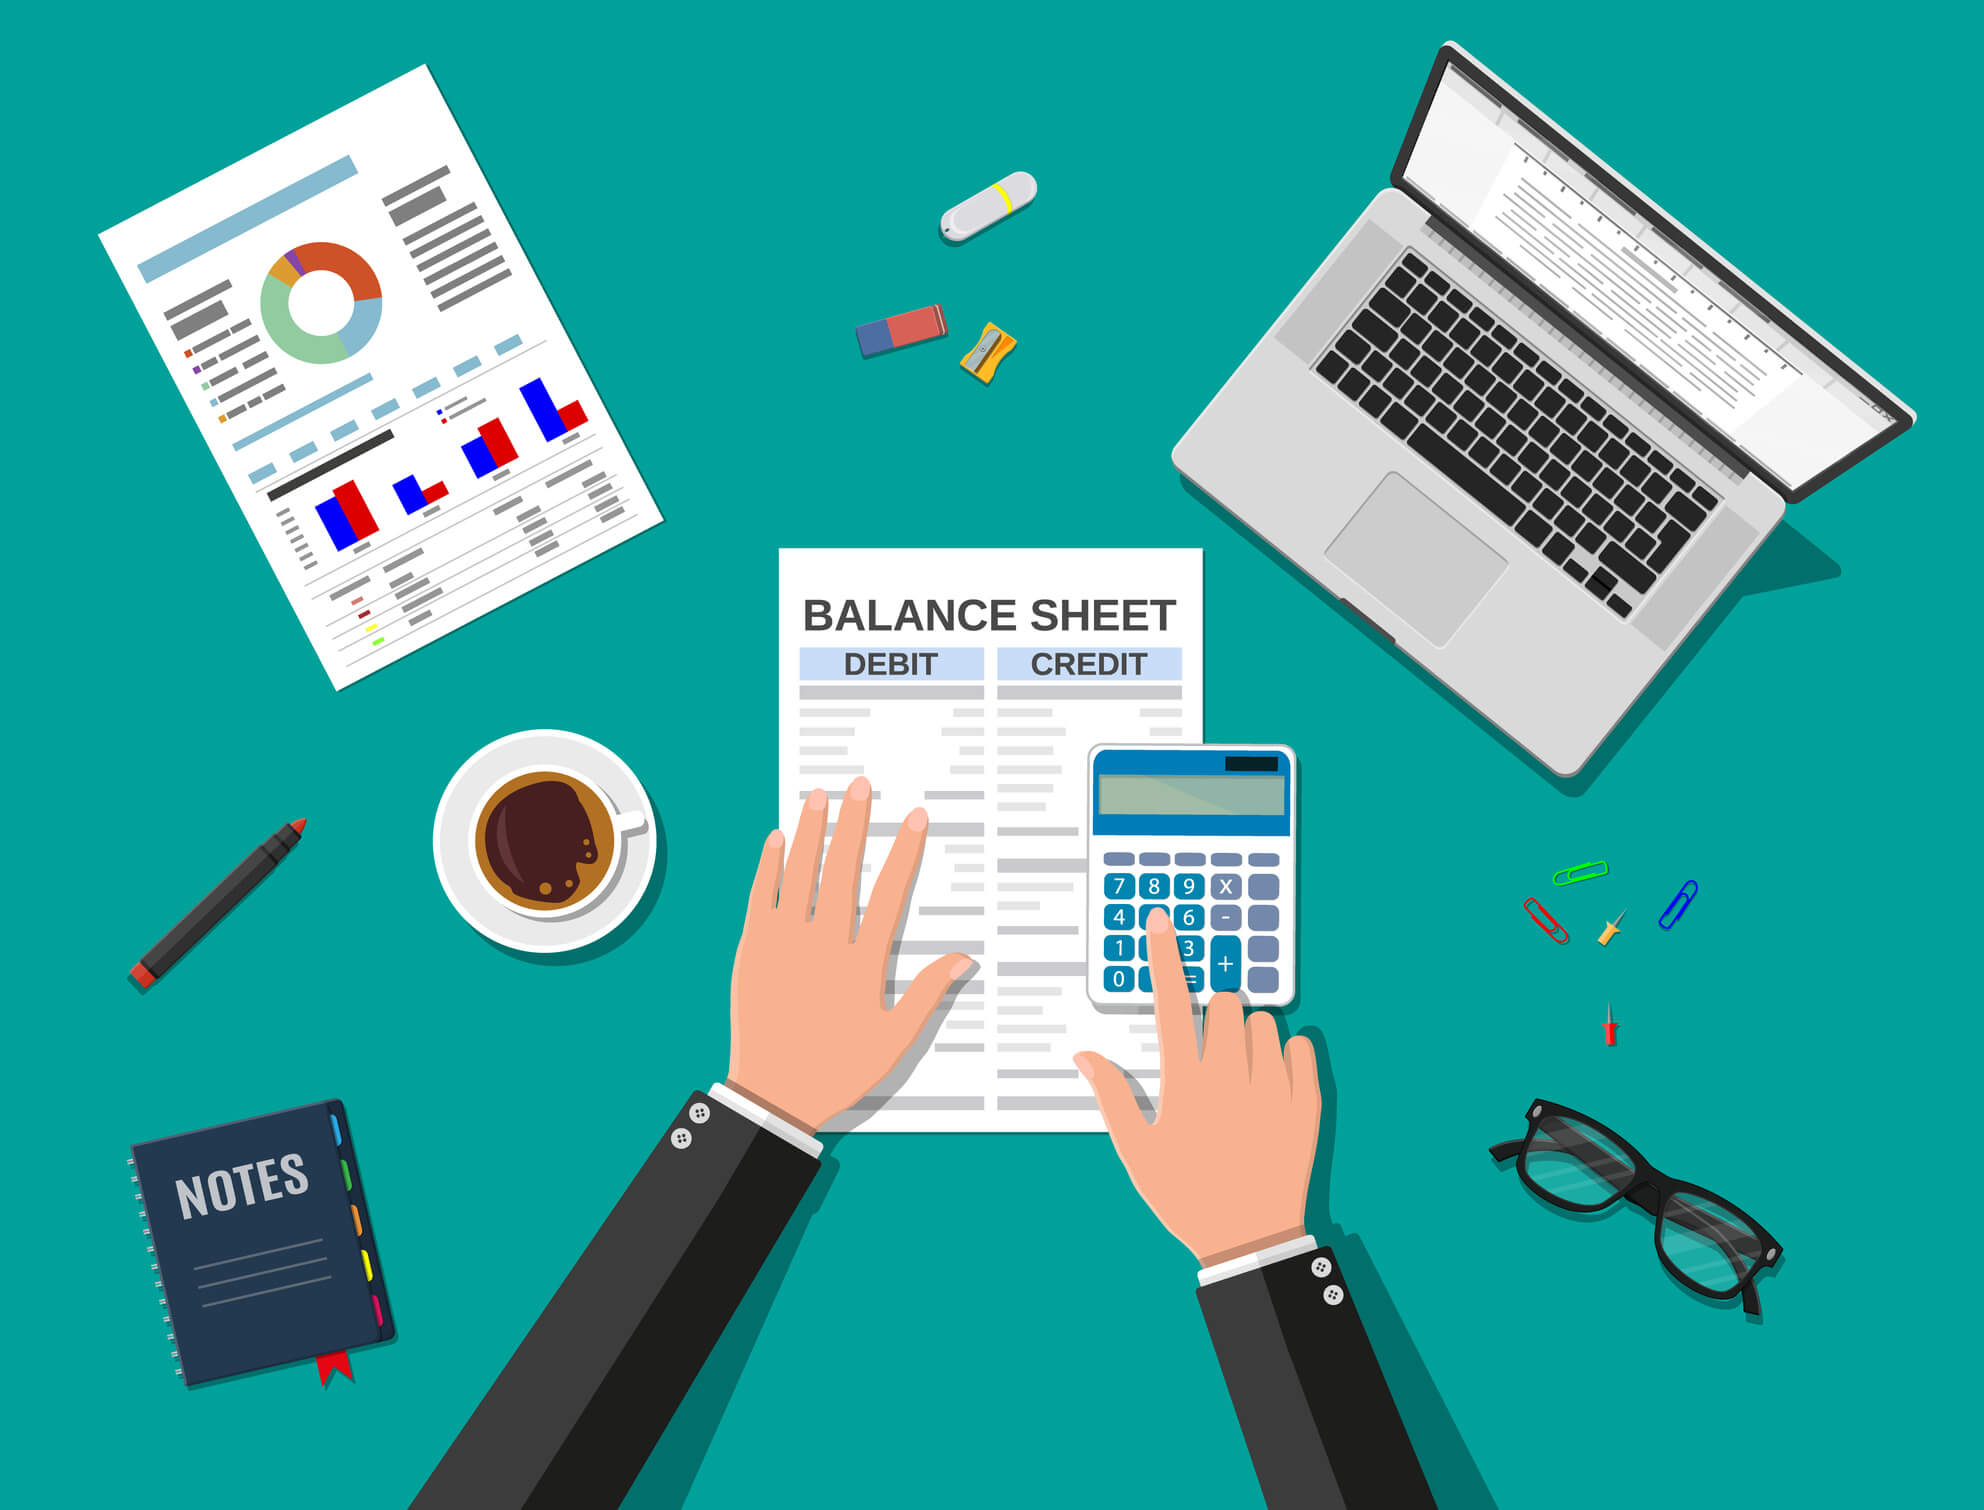 Balance Sheet Accounts Details - Complete Controller